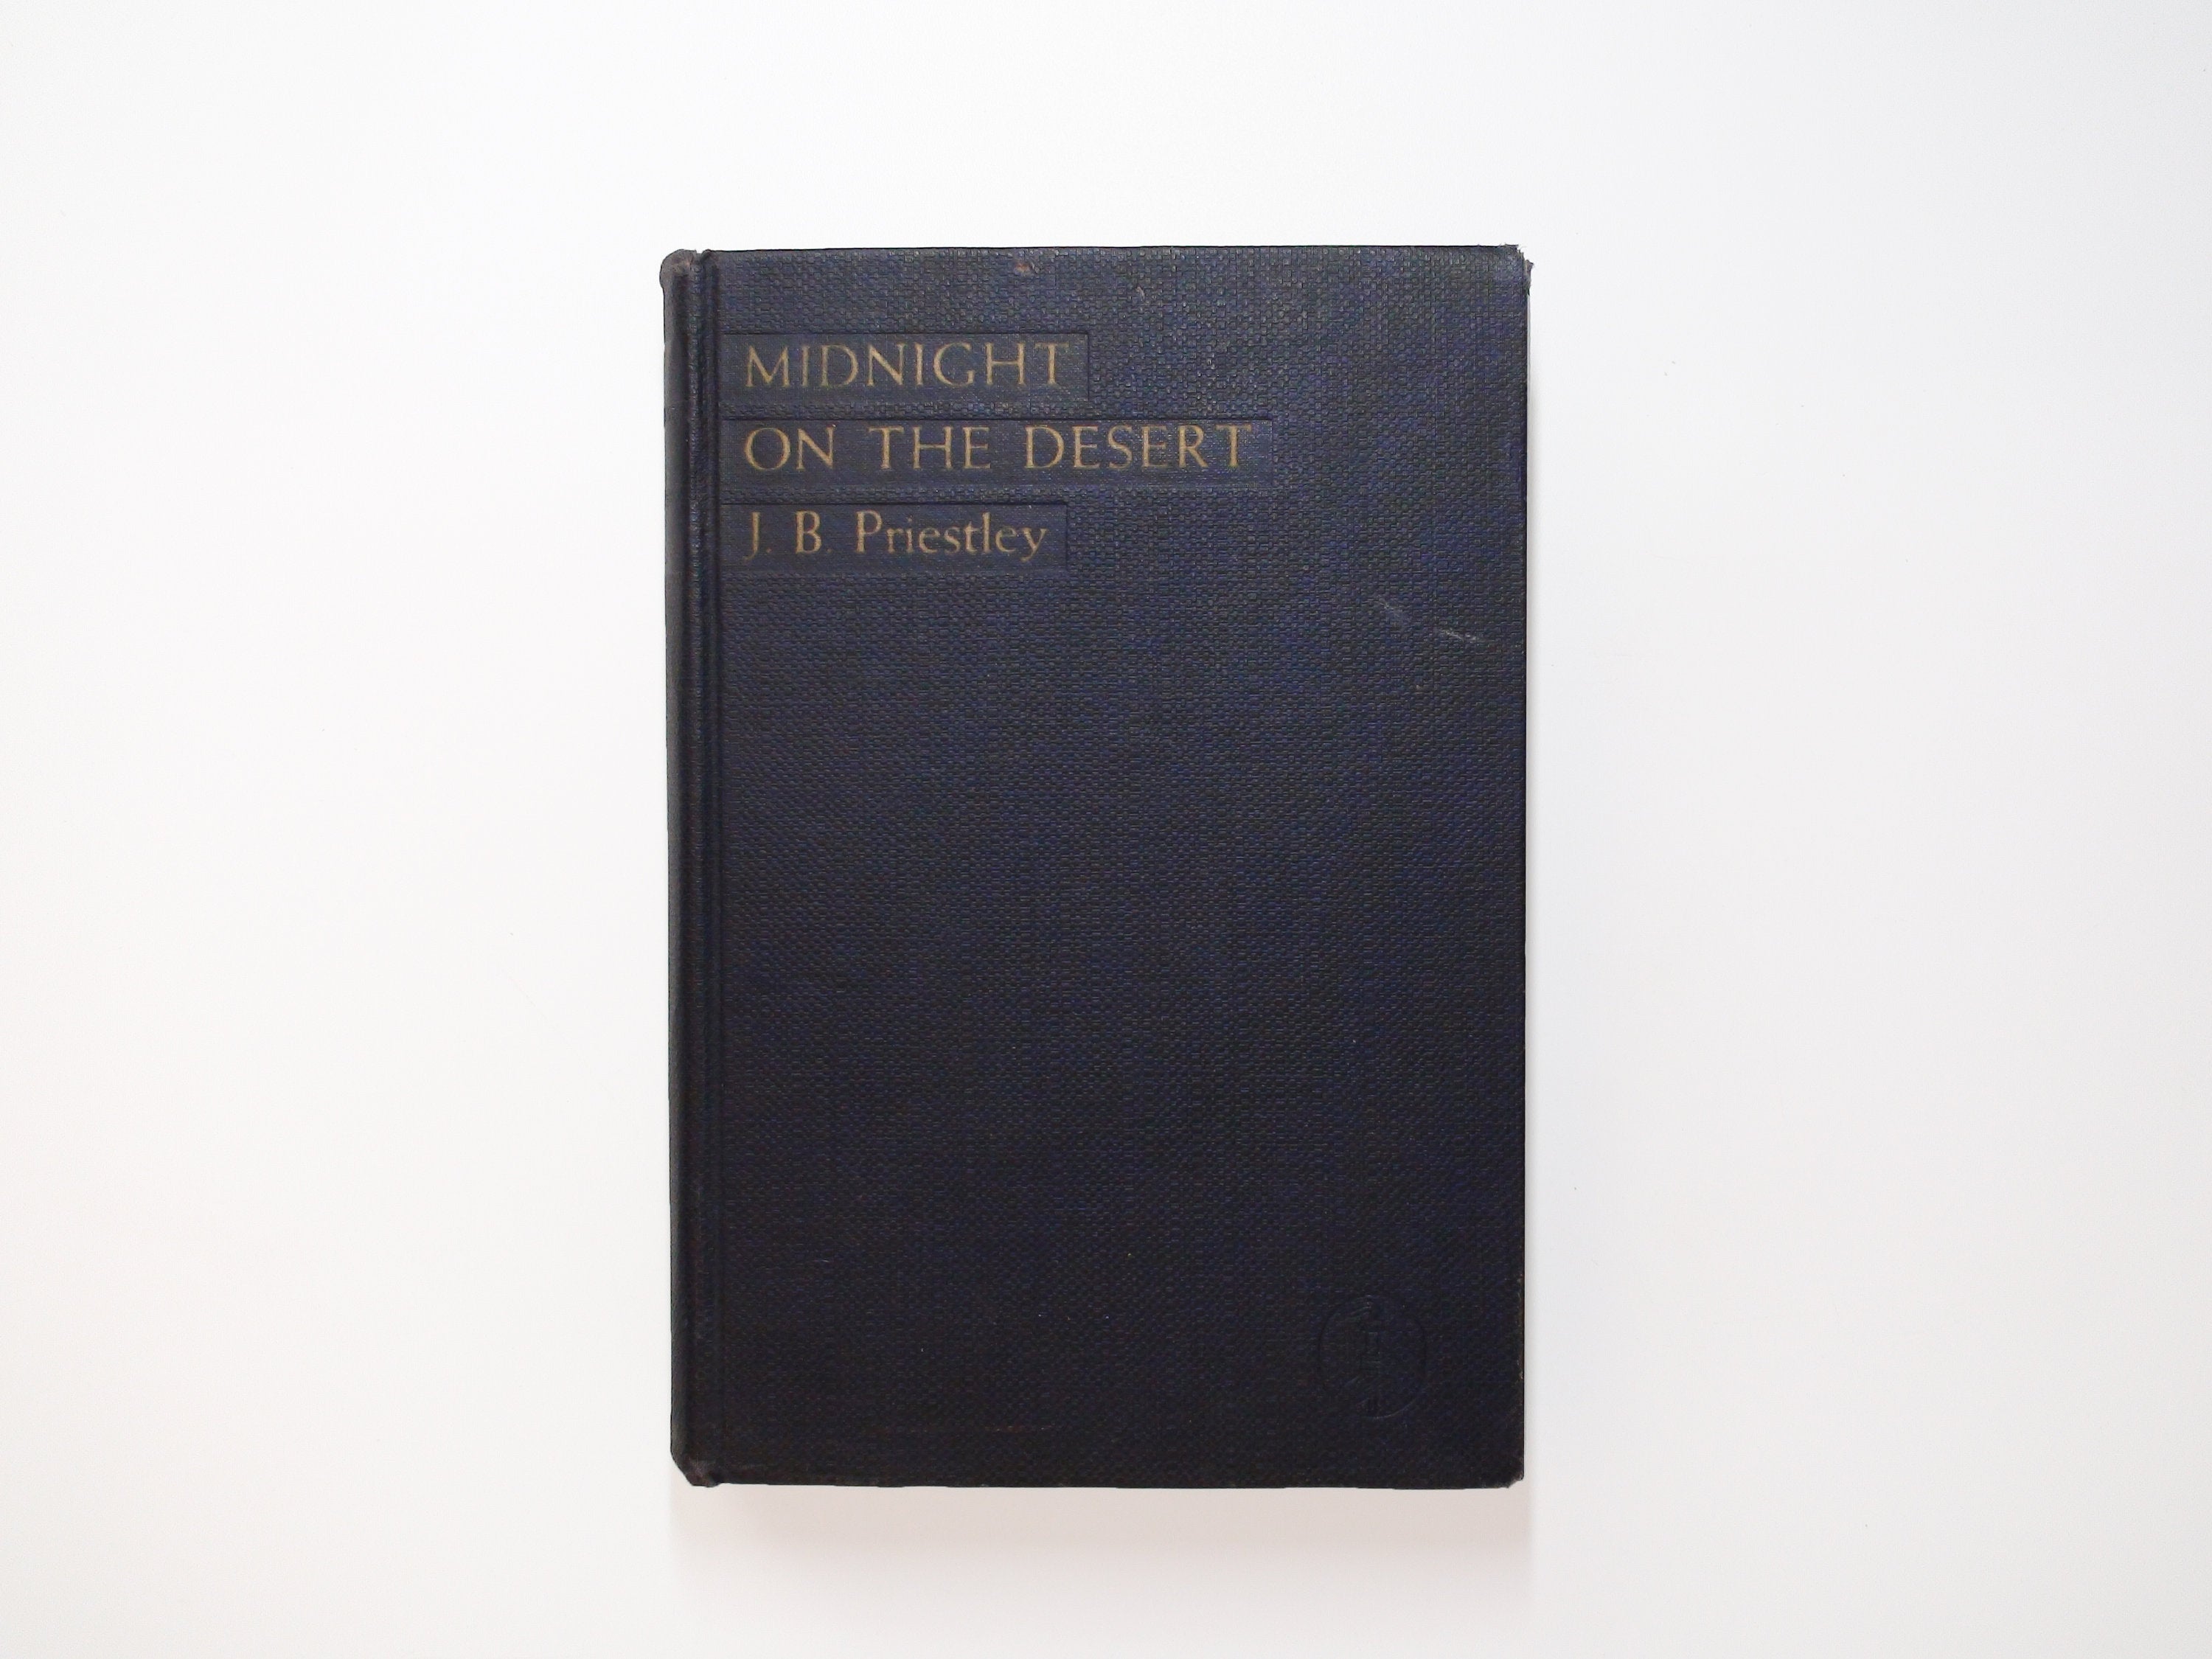 Midnight On the Desert, J. B. Priestley, Stated 1st Ed, 1937